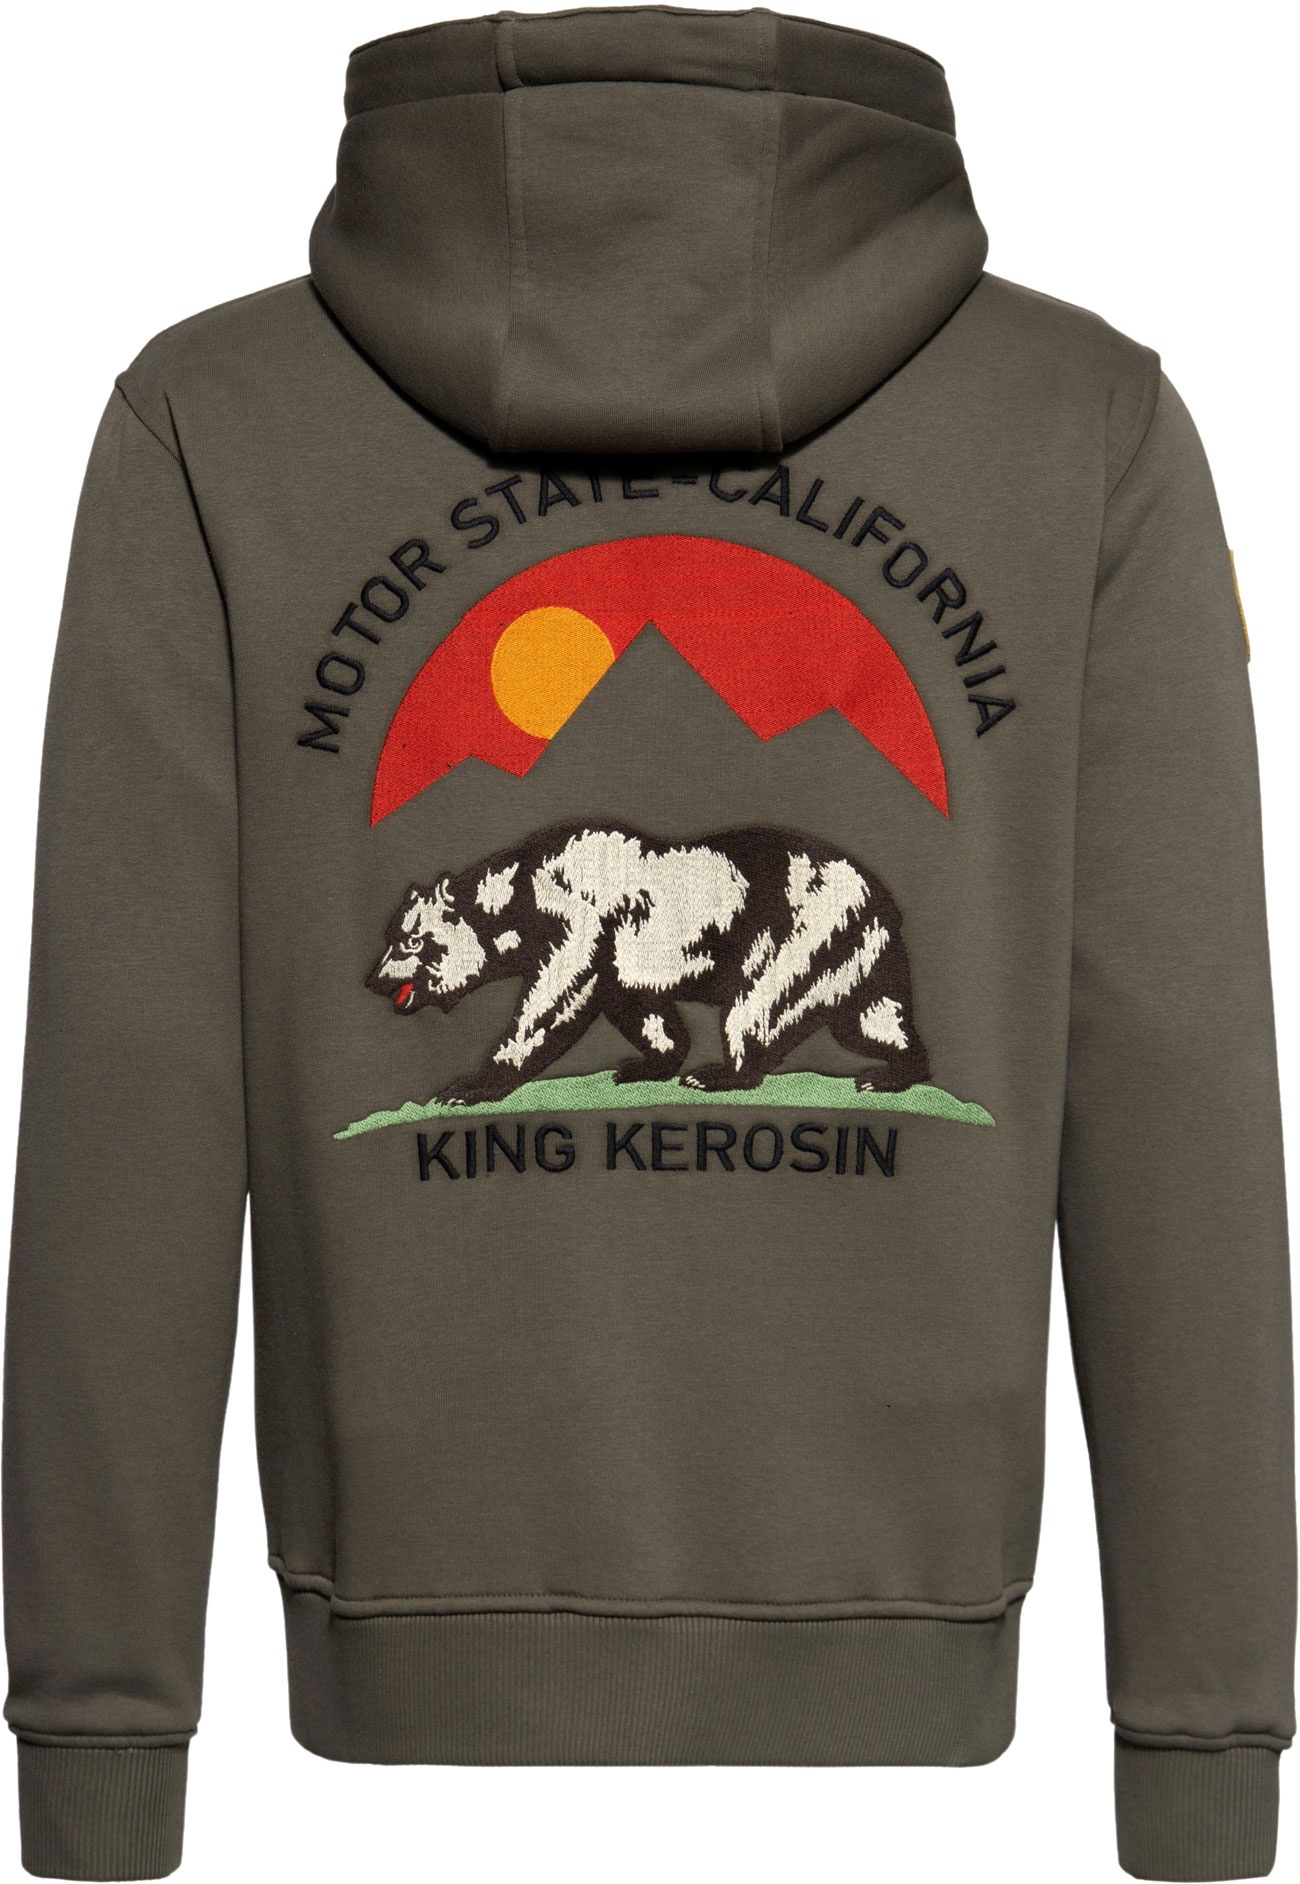 King Kerosin Motor Gear - Motor State California, Sweat à capuch - Marron - L